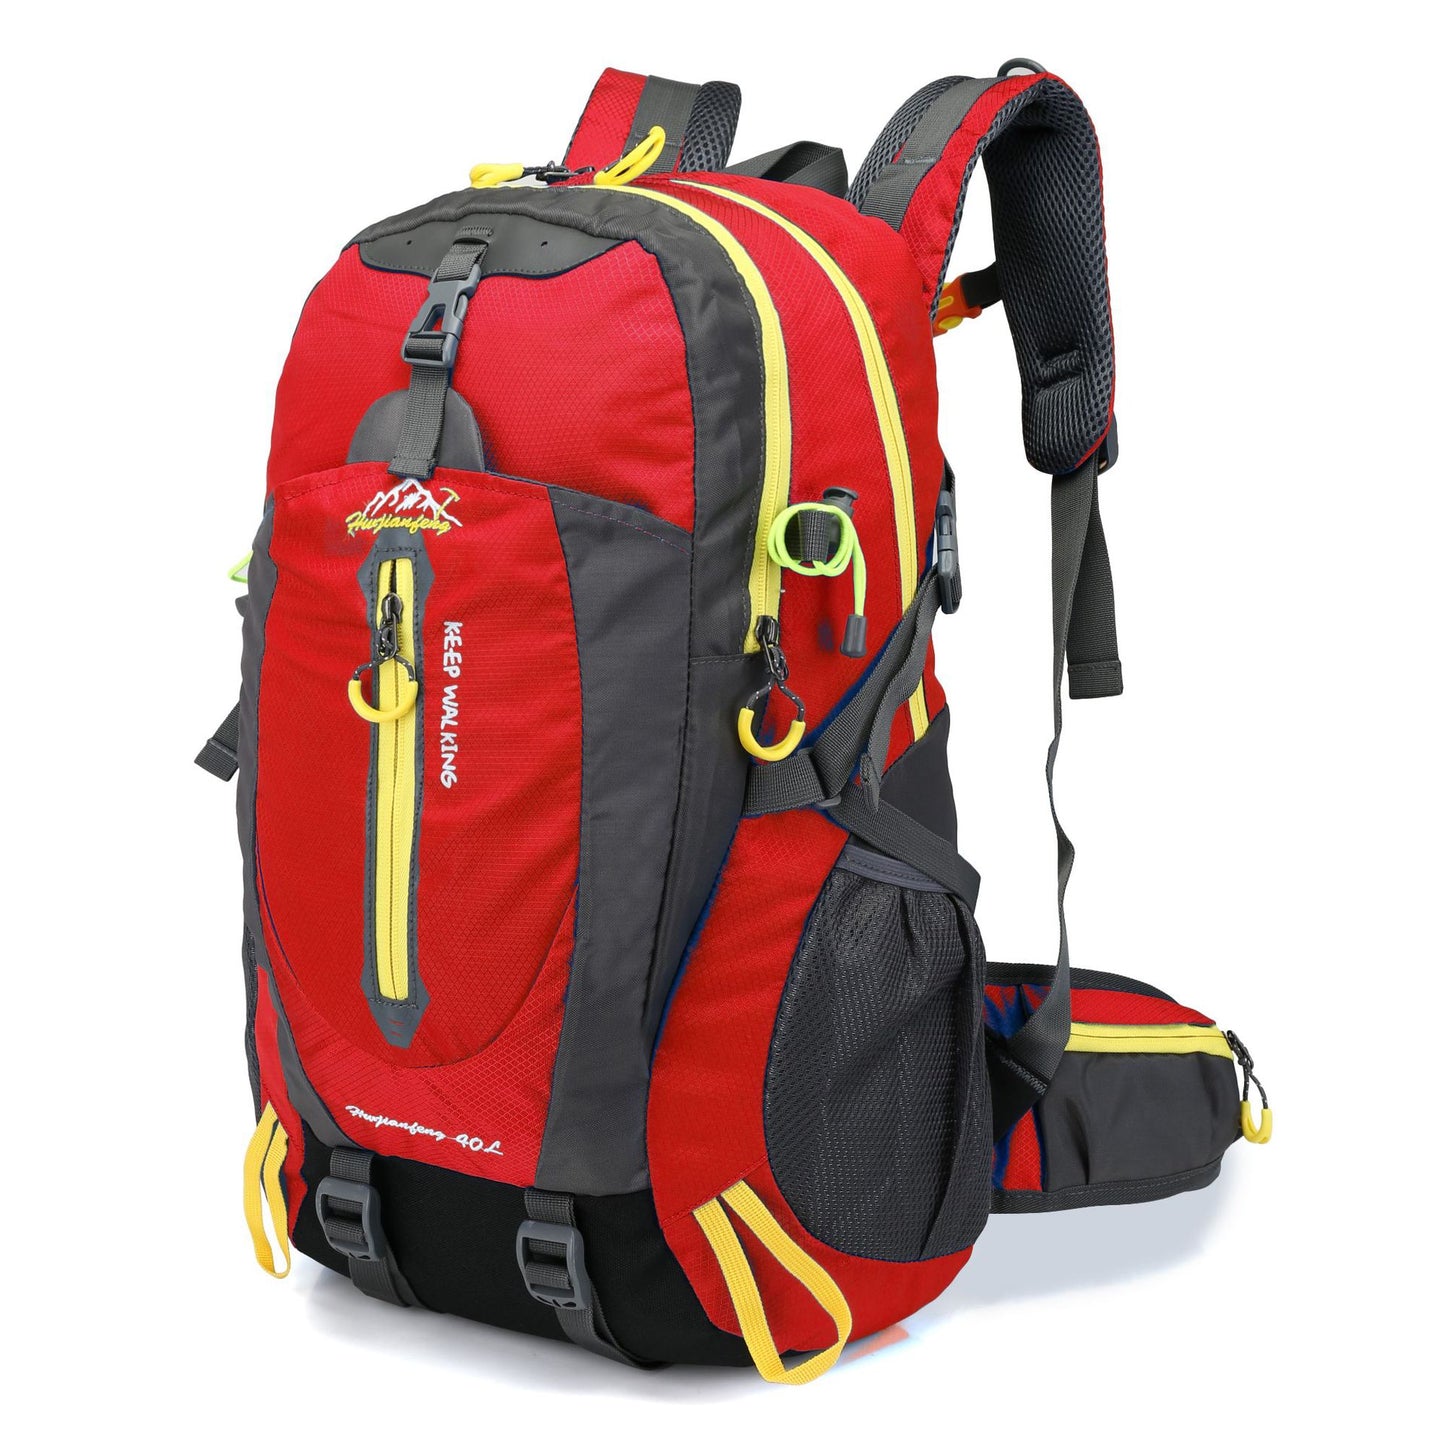 Hiking camping backpack